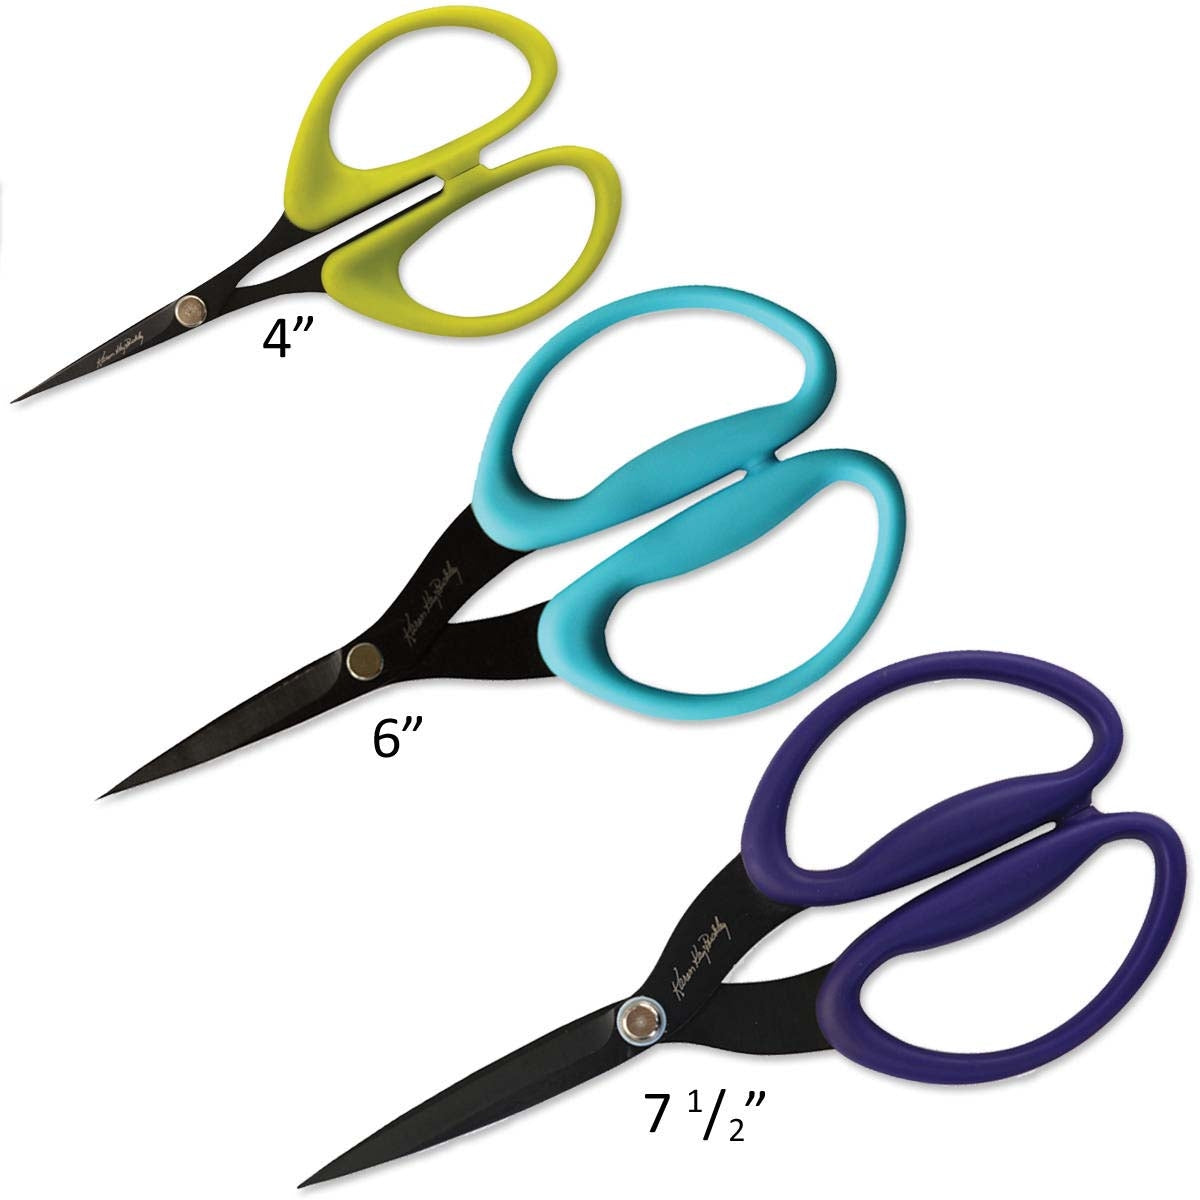 Perfect Multi Purpose Large 7.5 Inch Scissors by Karen Kay Buckley